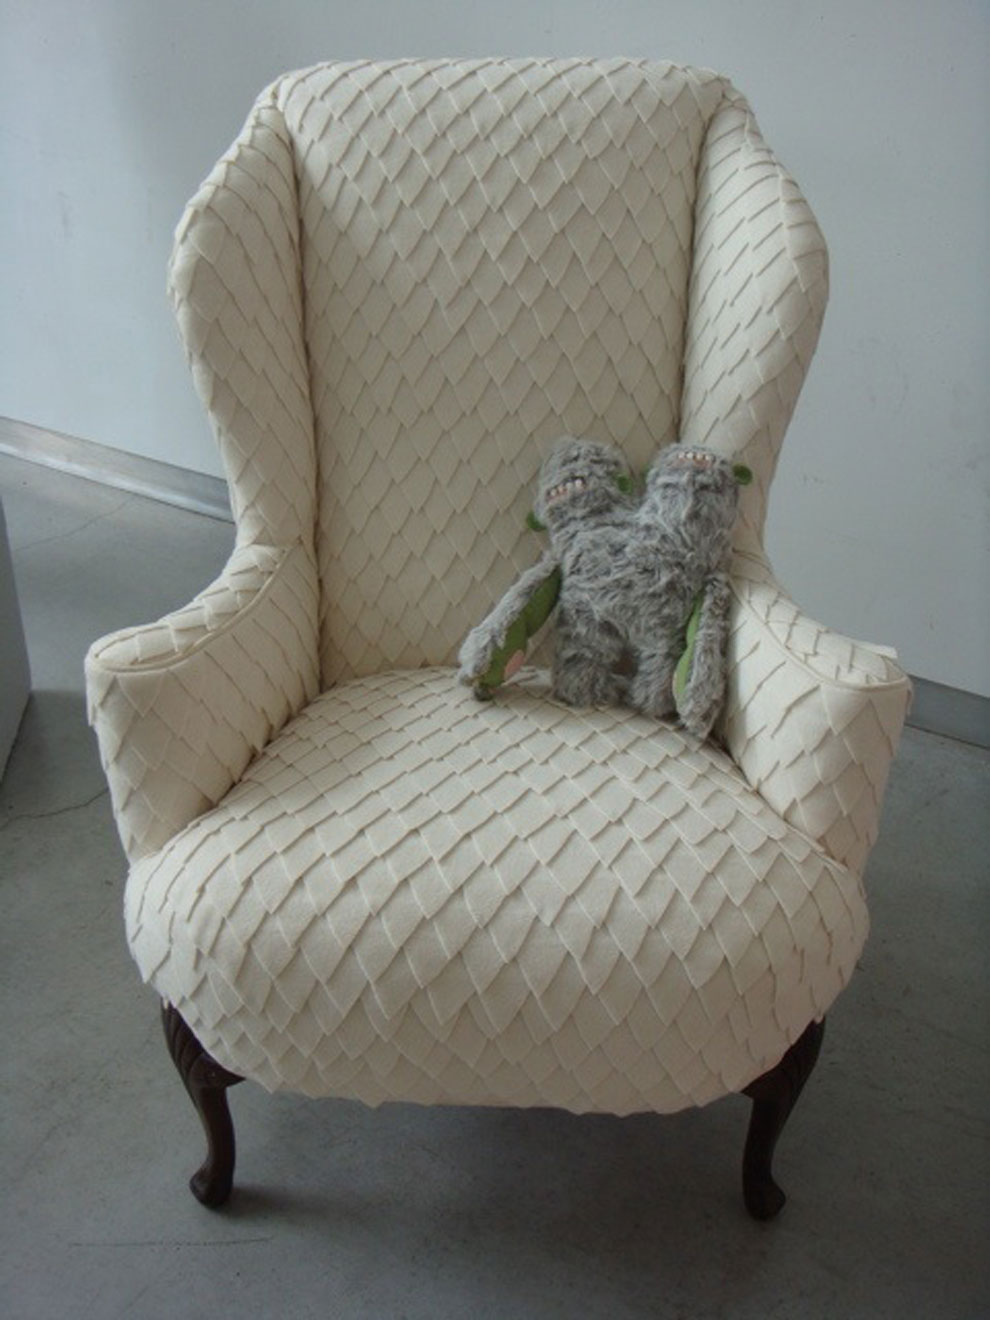 josh's monster skin chair in the design center gallery, spring 2008